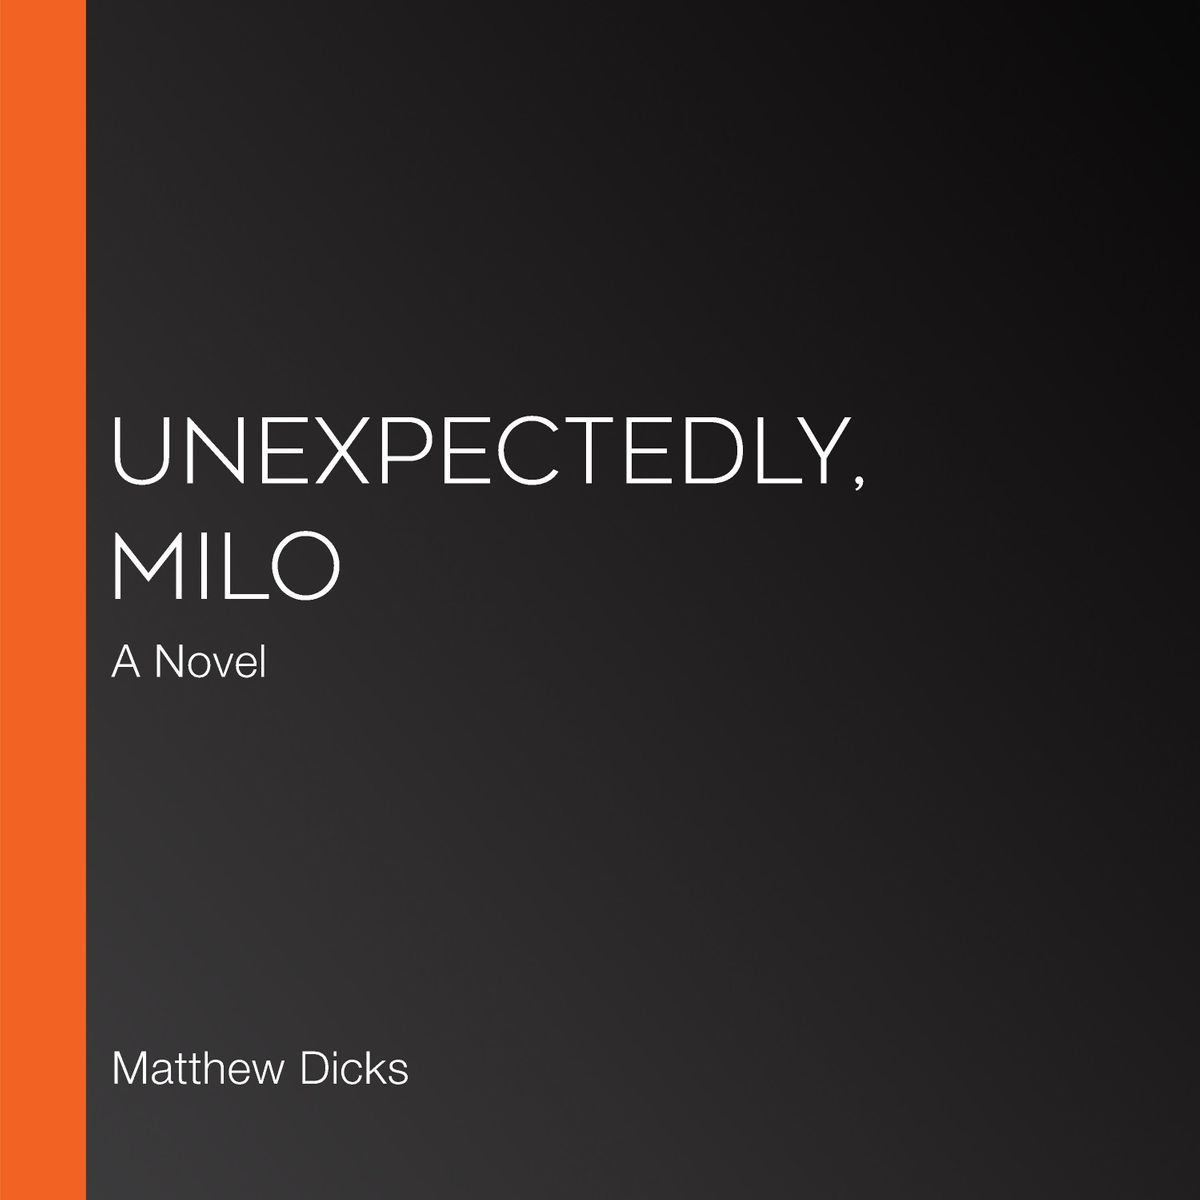 Sunstone reccomend Unexpectedly milo matthew dicks